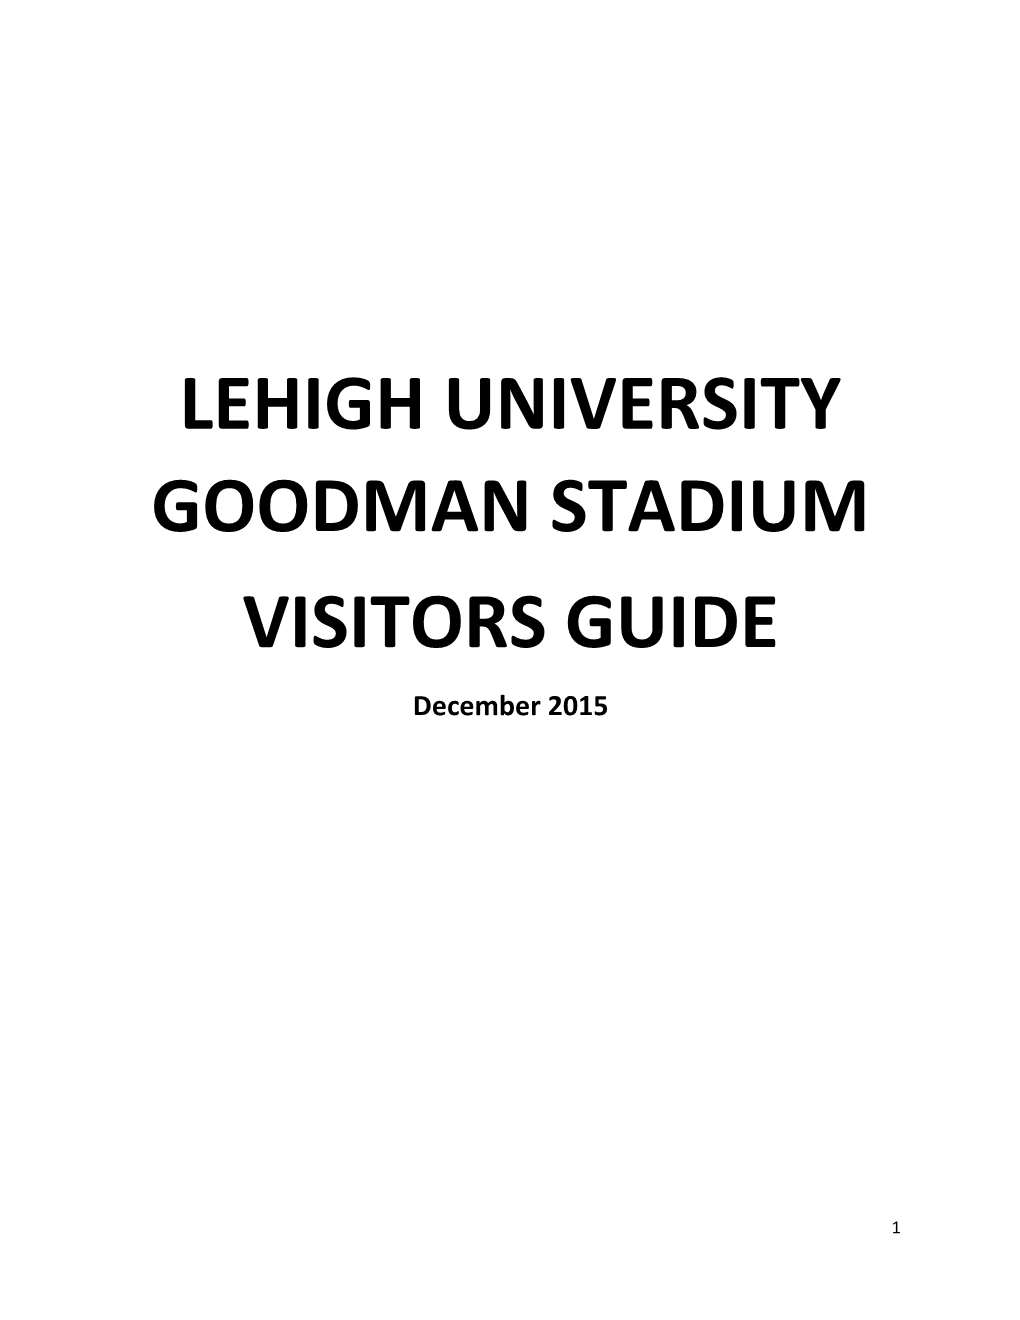 LEHIGH UNIVERSITY GOODMAN STADIUM VISITORS GUIDE December 2015